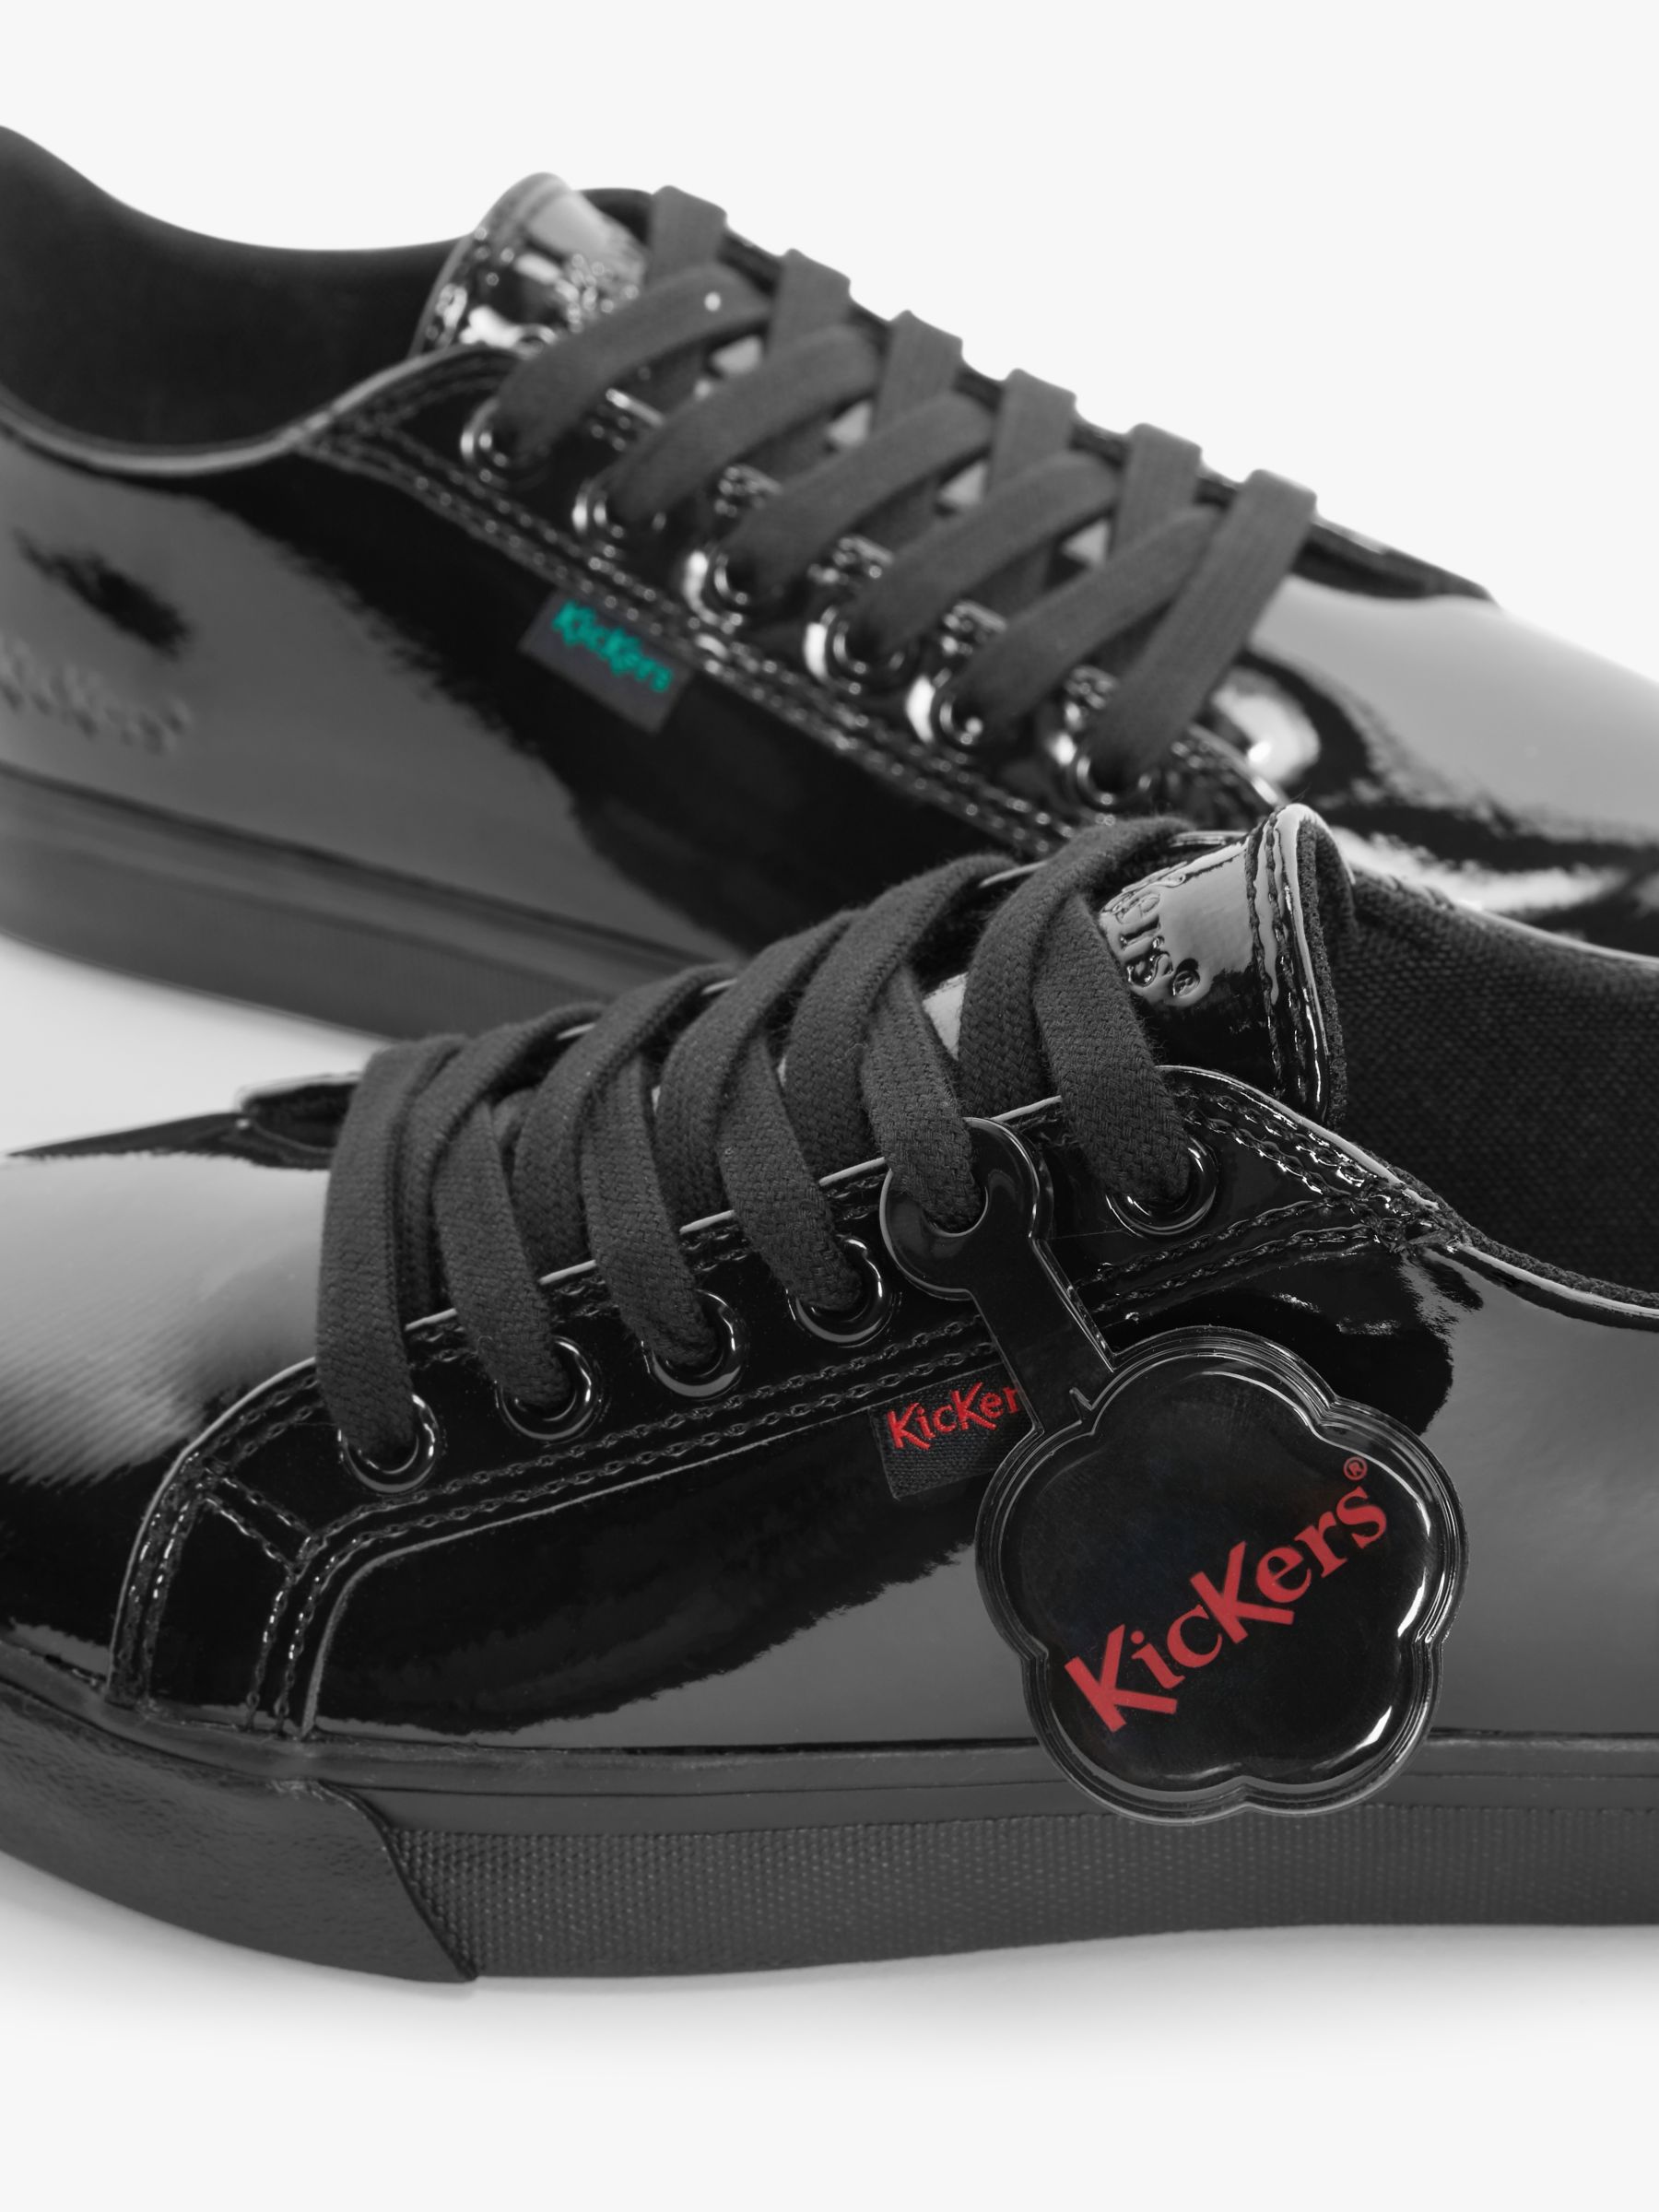 Kickers Kids' Tovni Lacer School Shoes, Black Patent, 31